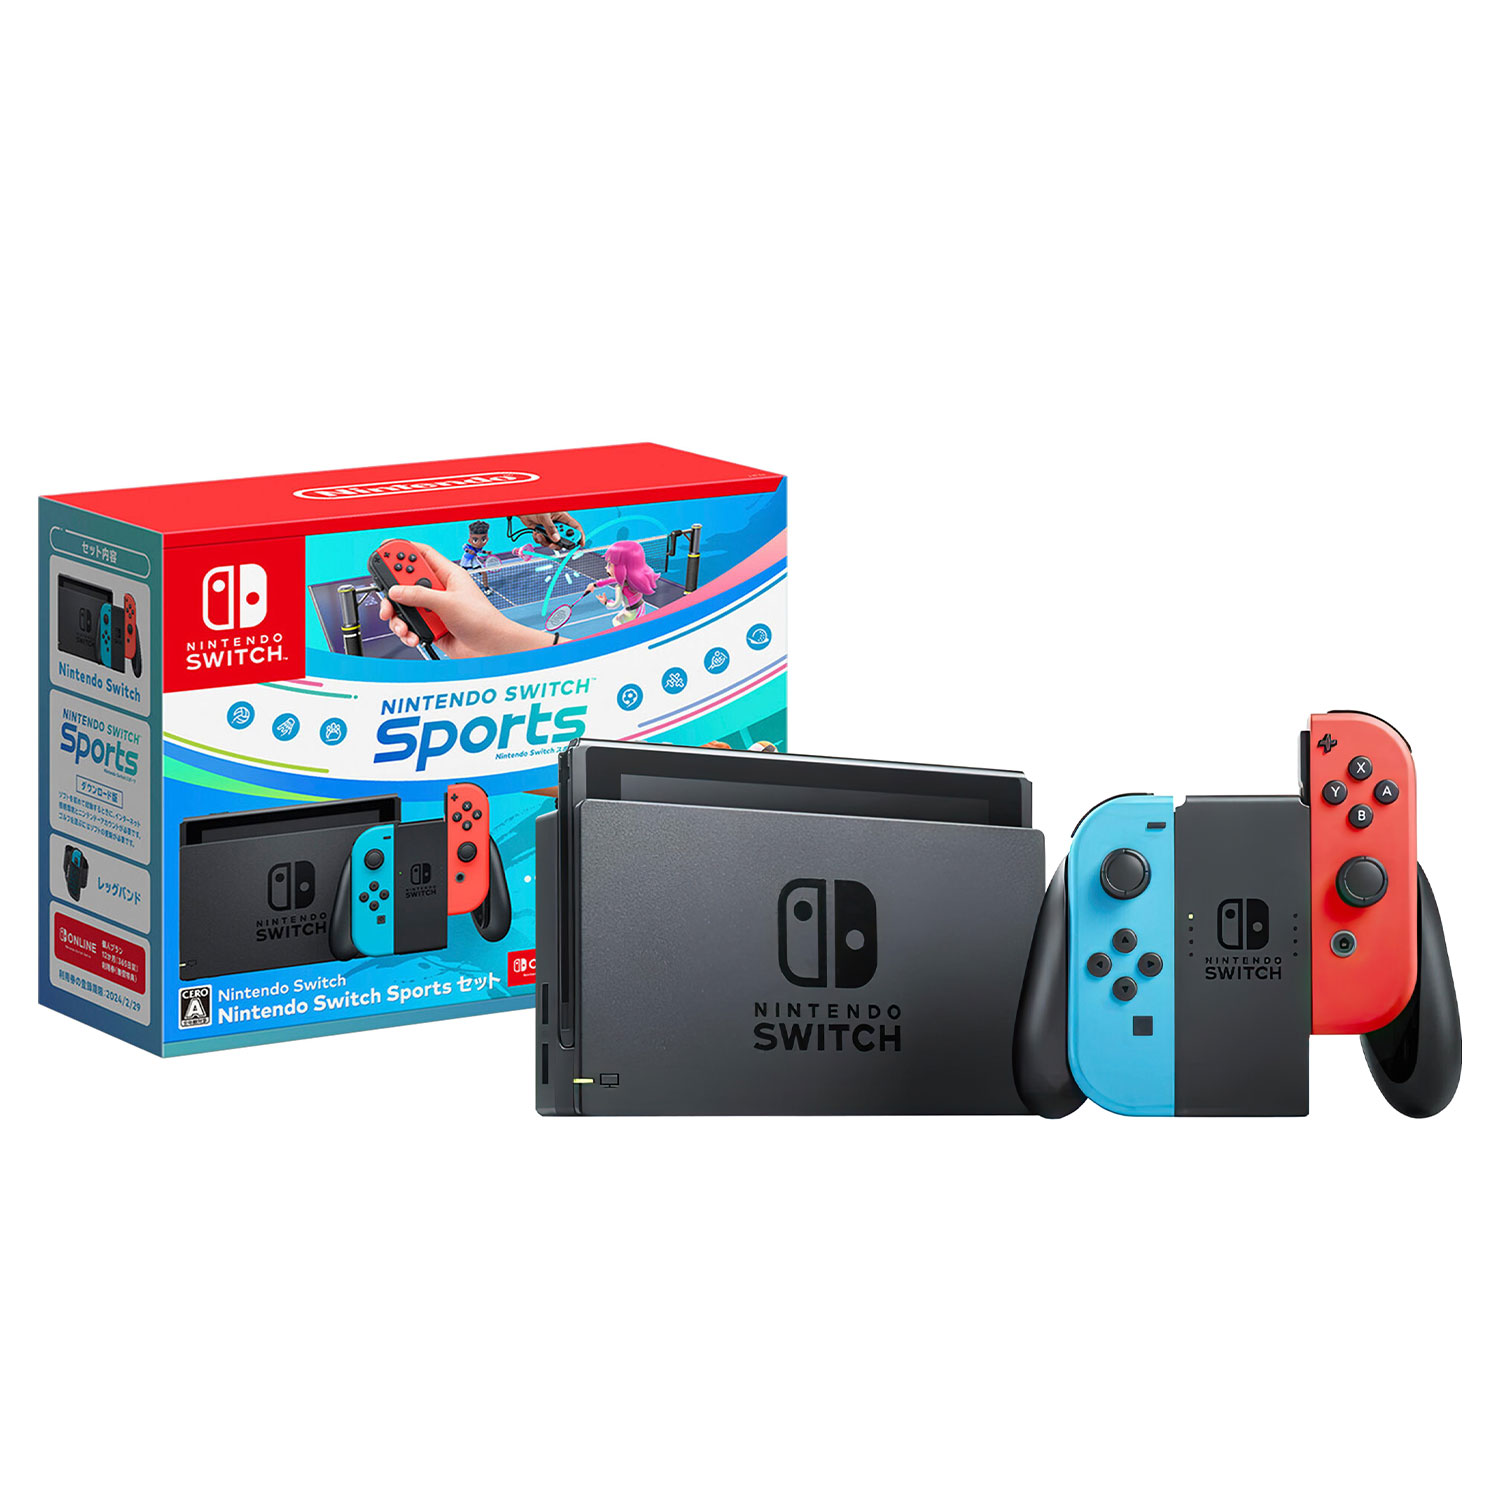 Console Nintendo Switch Sports V2 32GB Japão - Neon (HAD-S-KABGR)